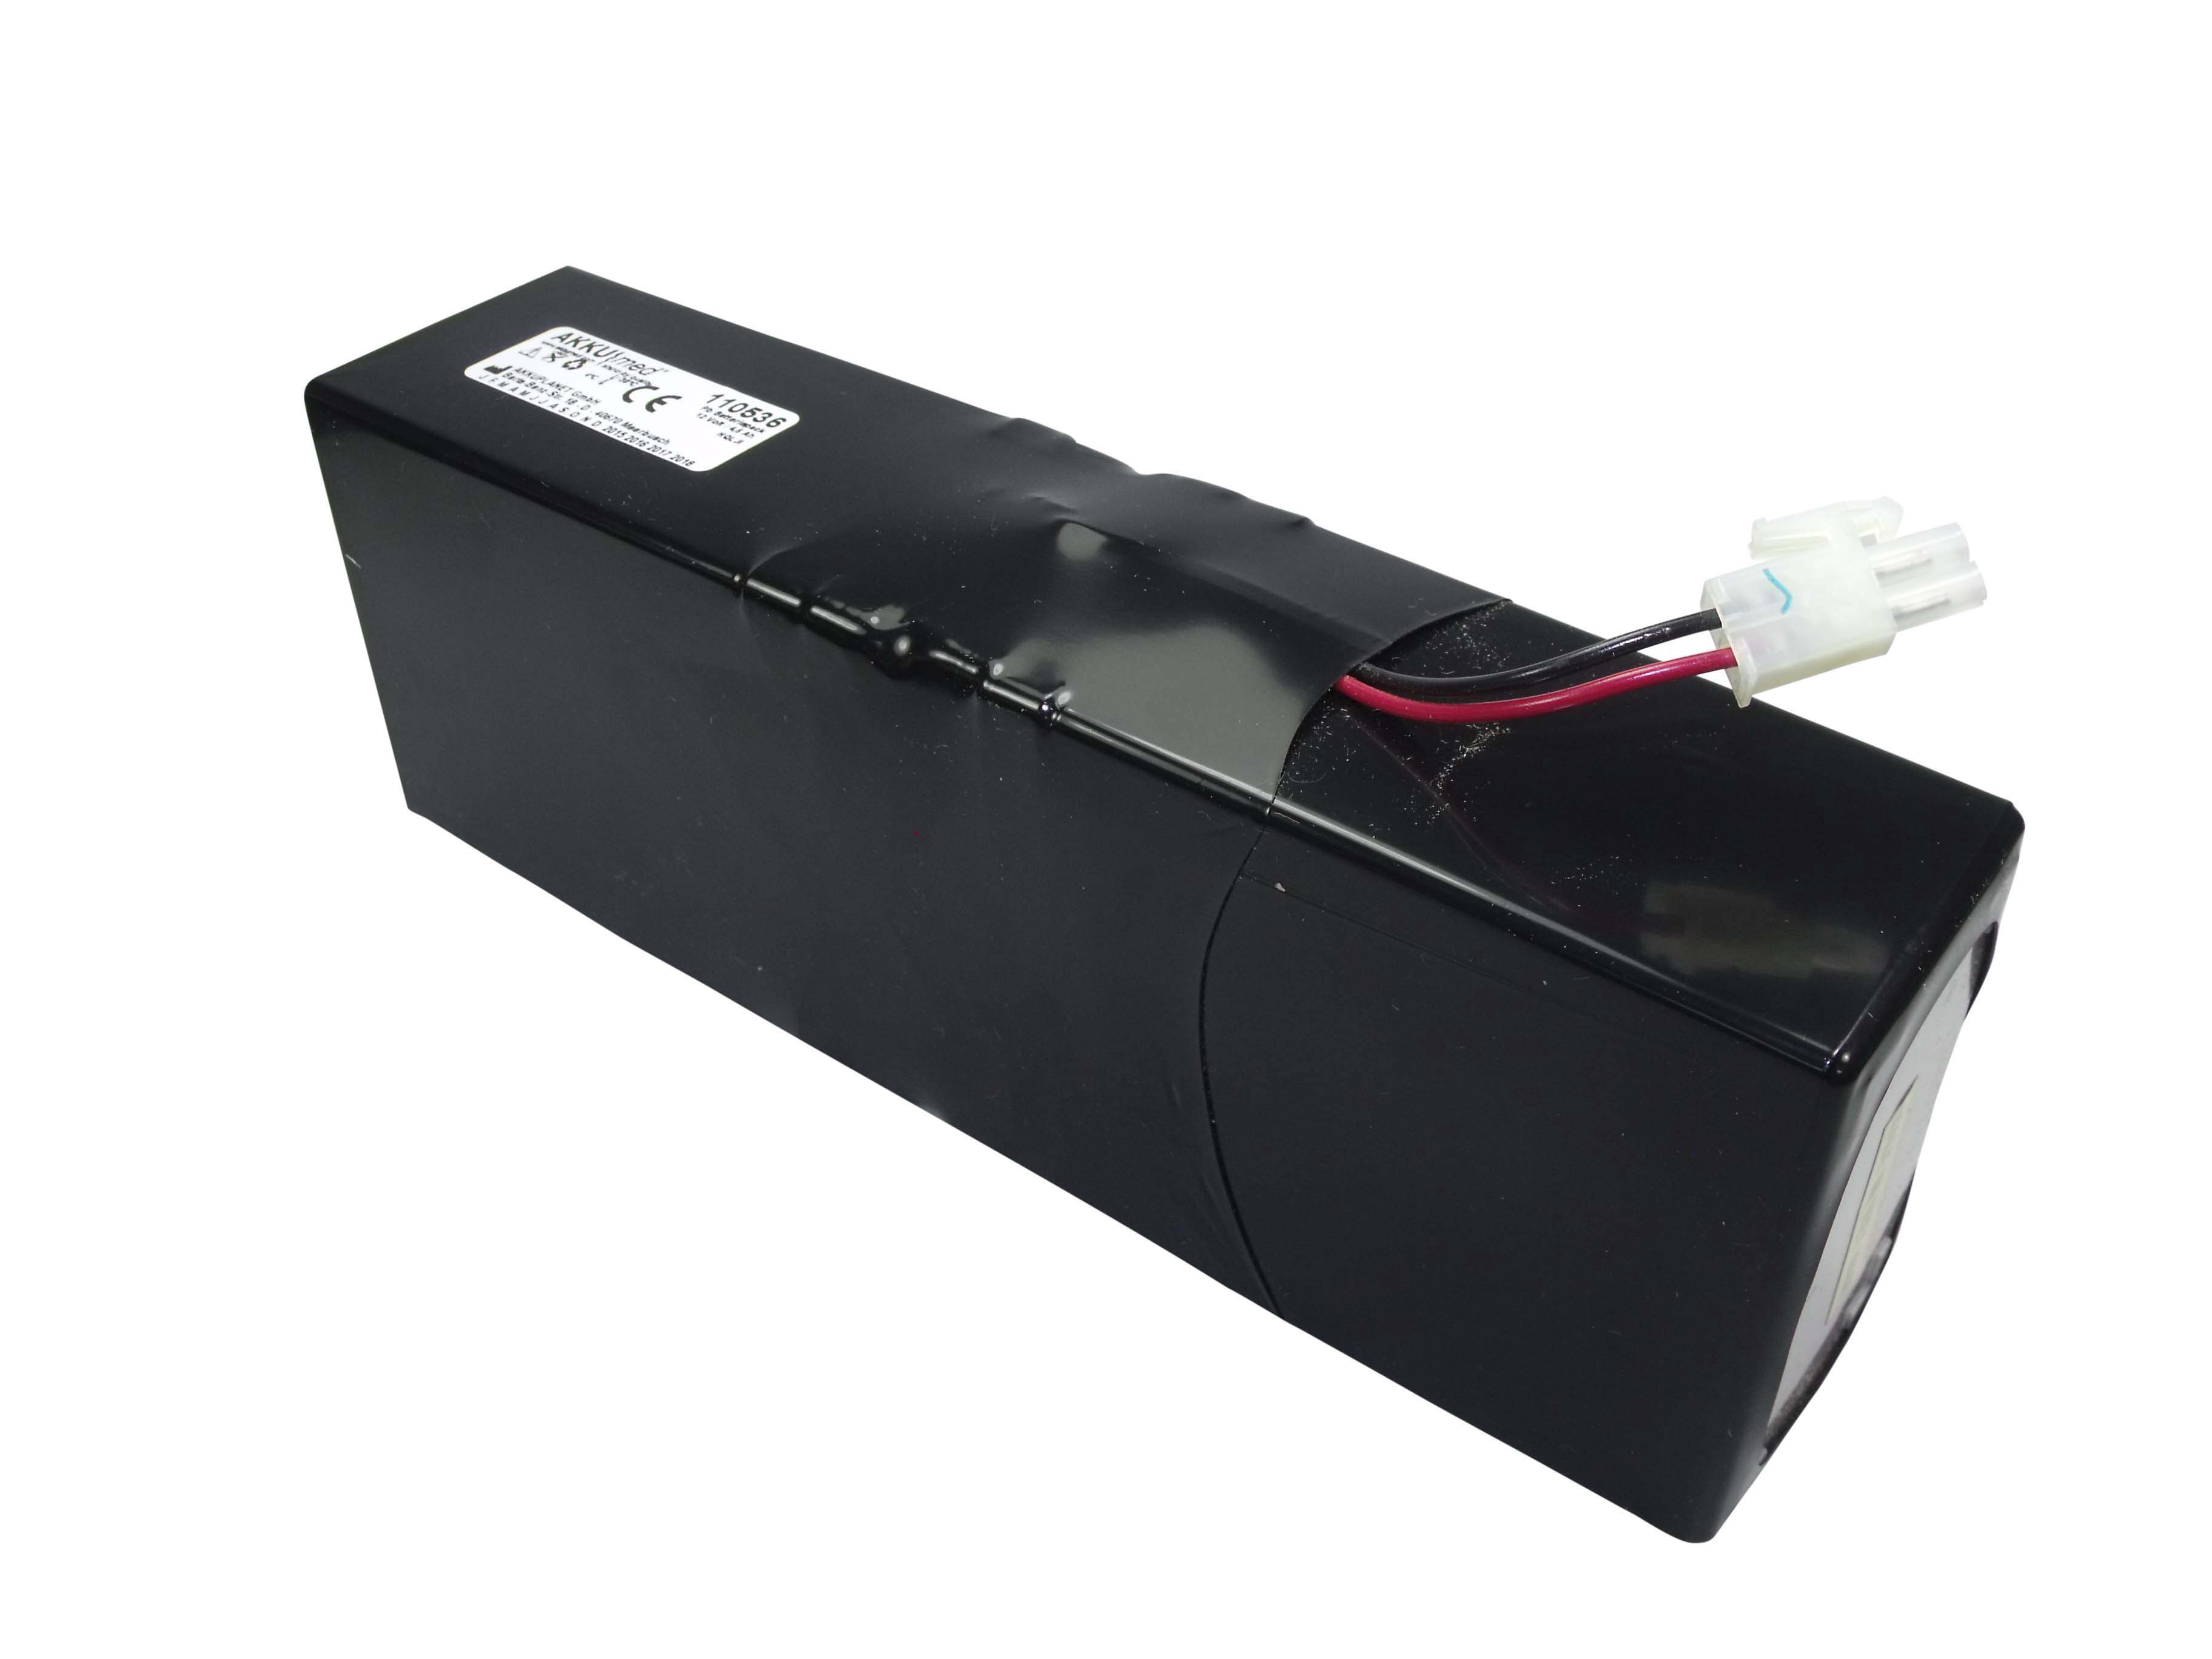 AKKUmed lead-acid battery suitable for Pulmonetic Systems LTV1200 vent - internal battery